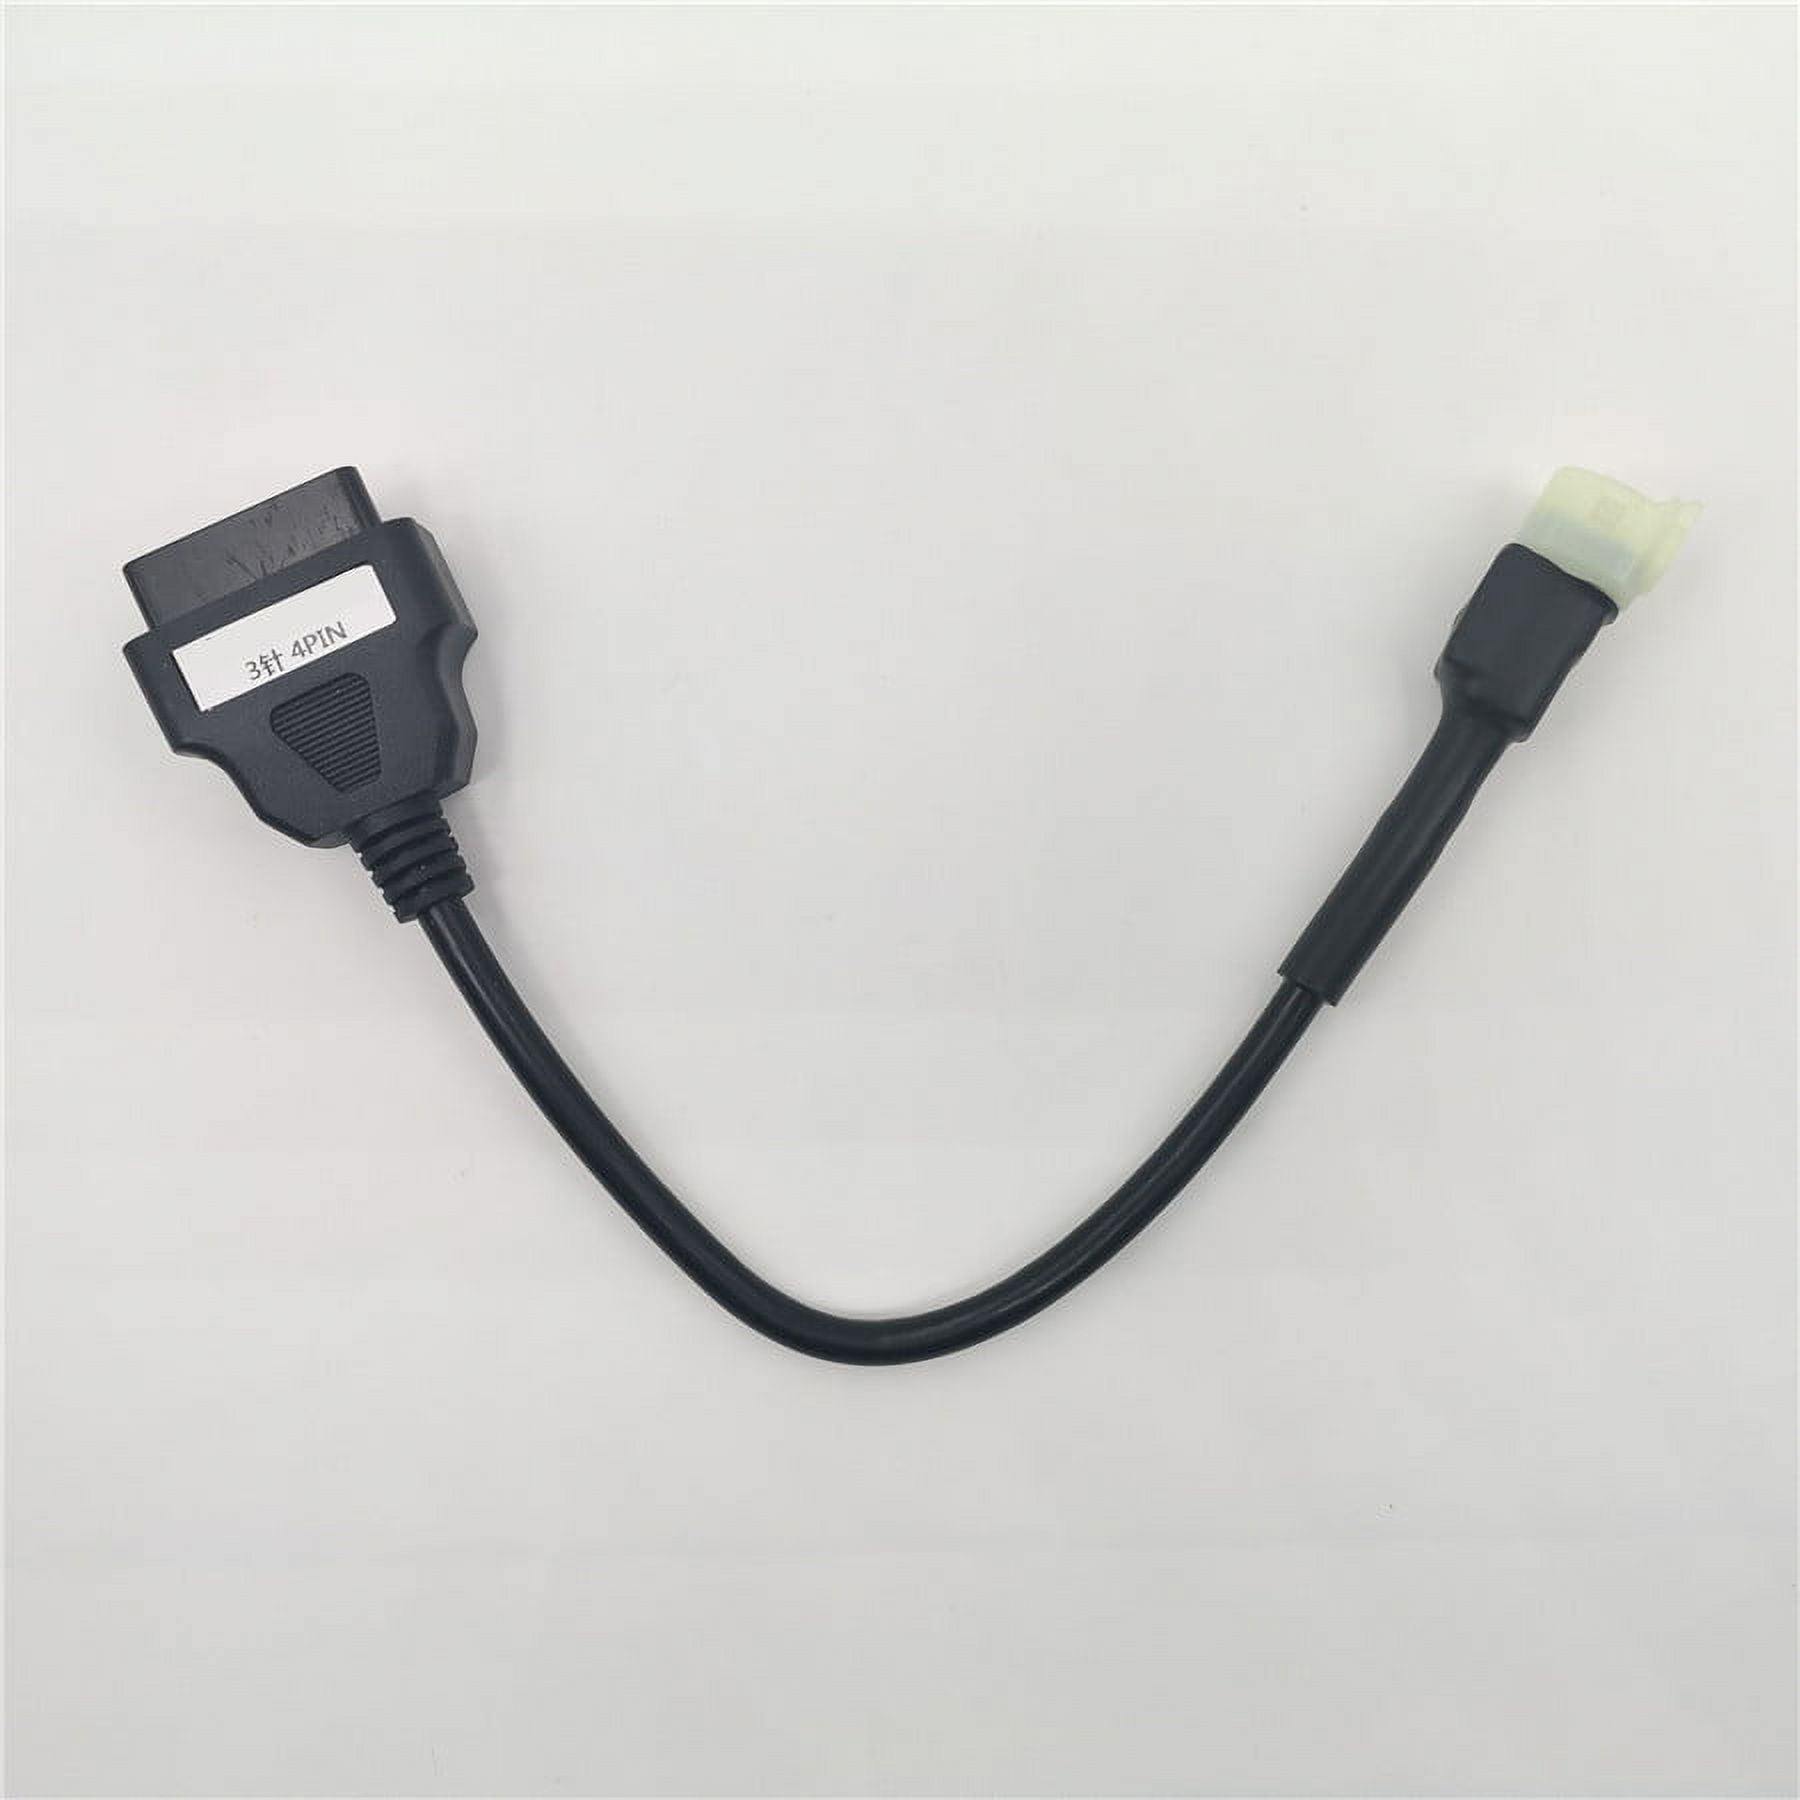 For Honda CBR600/1000RR 4 Pin to 16 Pin OBD2 Cable Connectors Diagnostic  Adapter